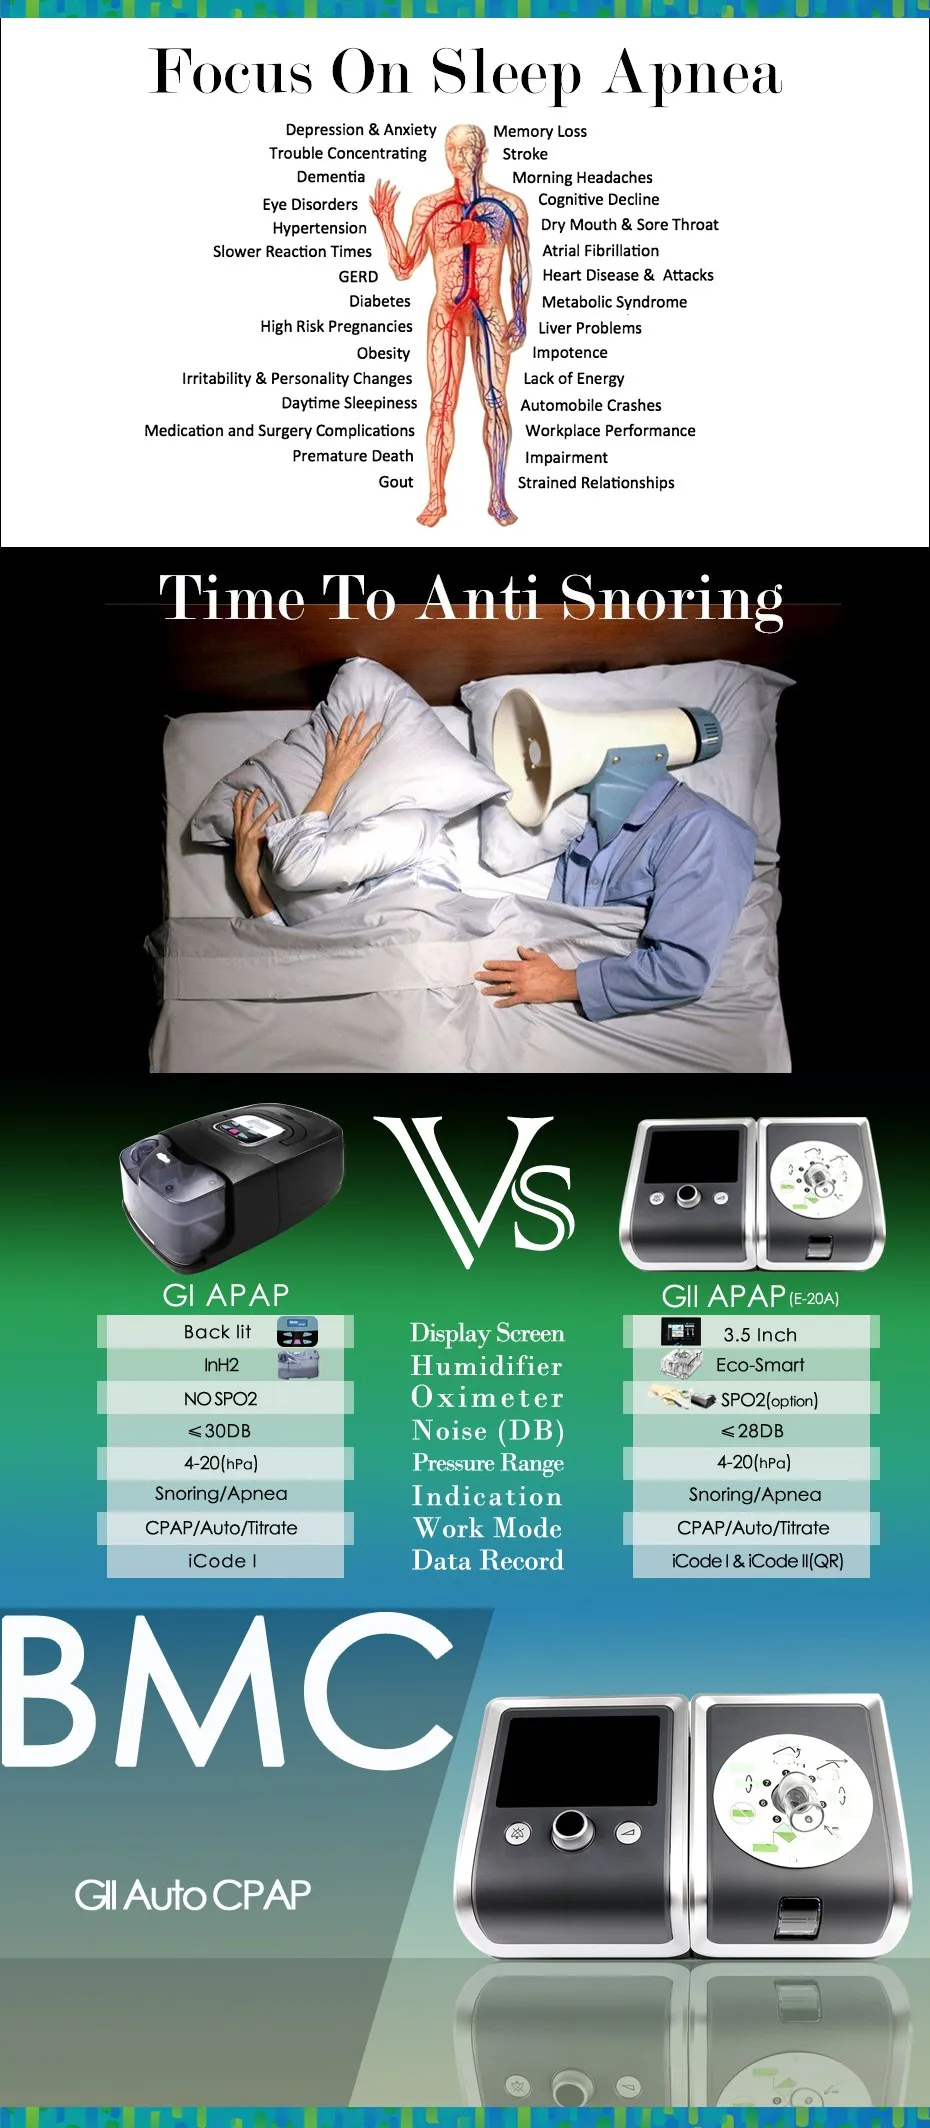 DOCTODD GII Авто CPAP аппарат для сна E-20AH-O портативный вентилятор для сна Храп апноэ W/увлажнитель маска шланг SD карты сумка